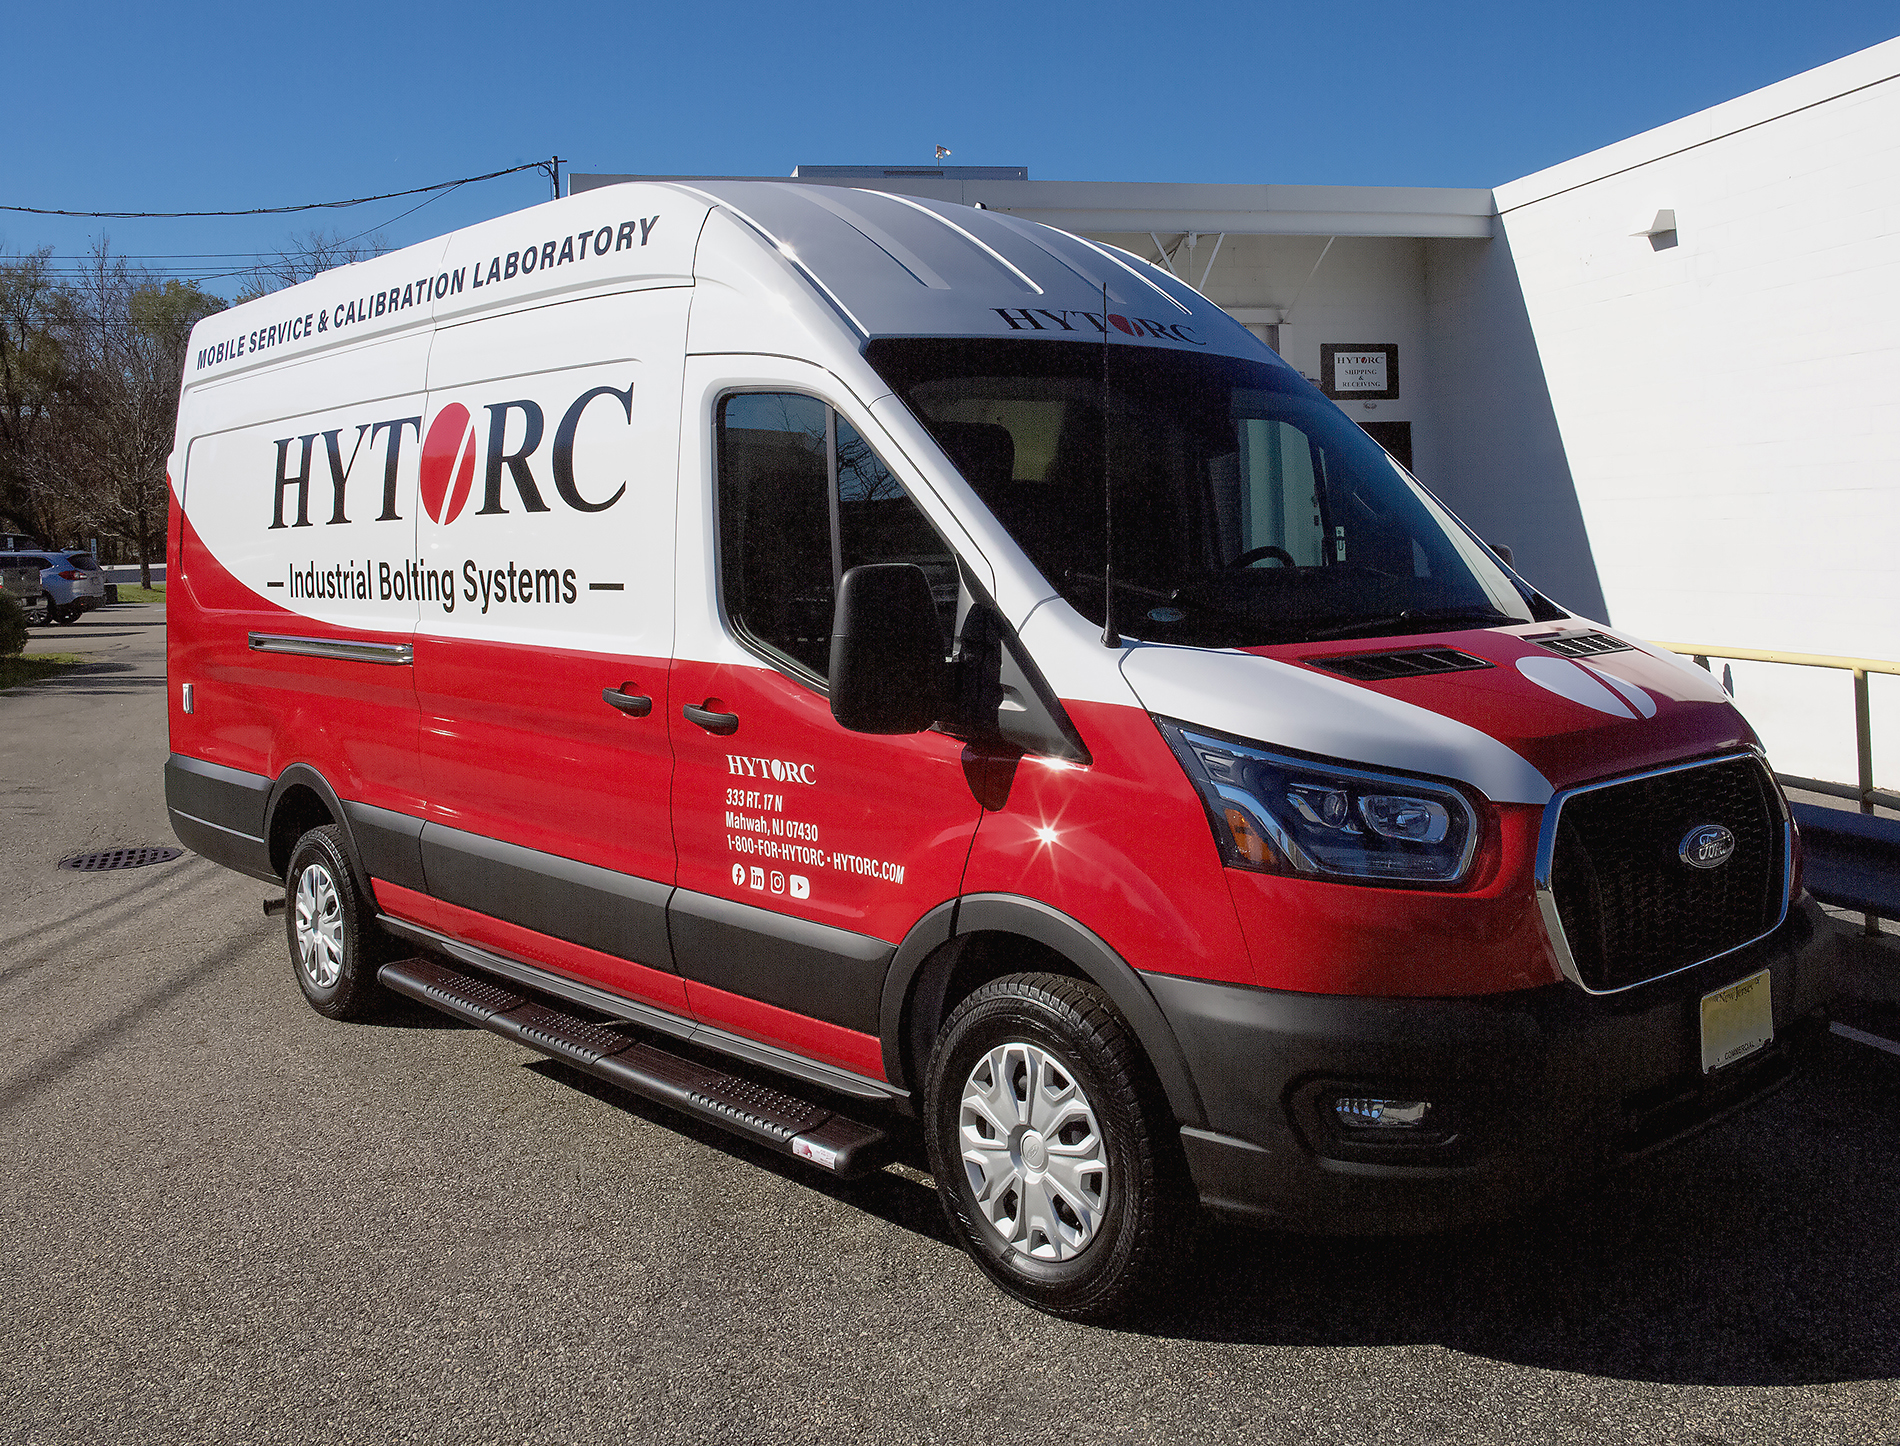 HYTORC mobile service van parked